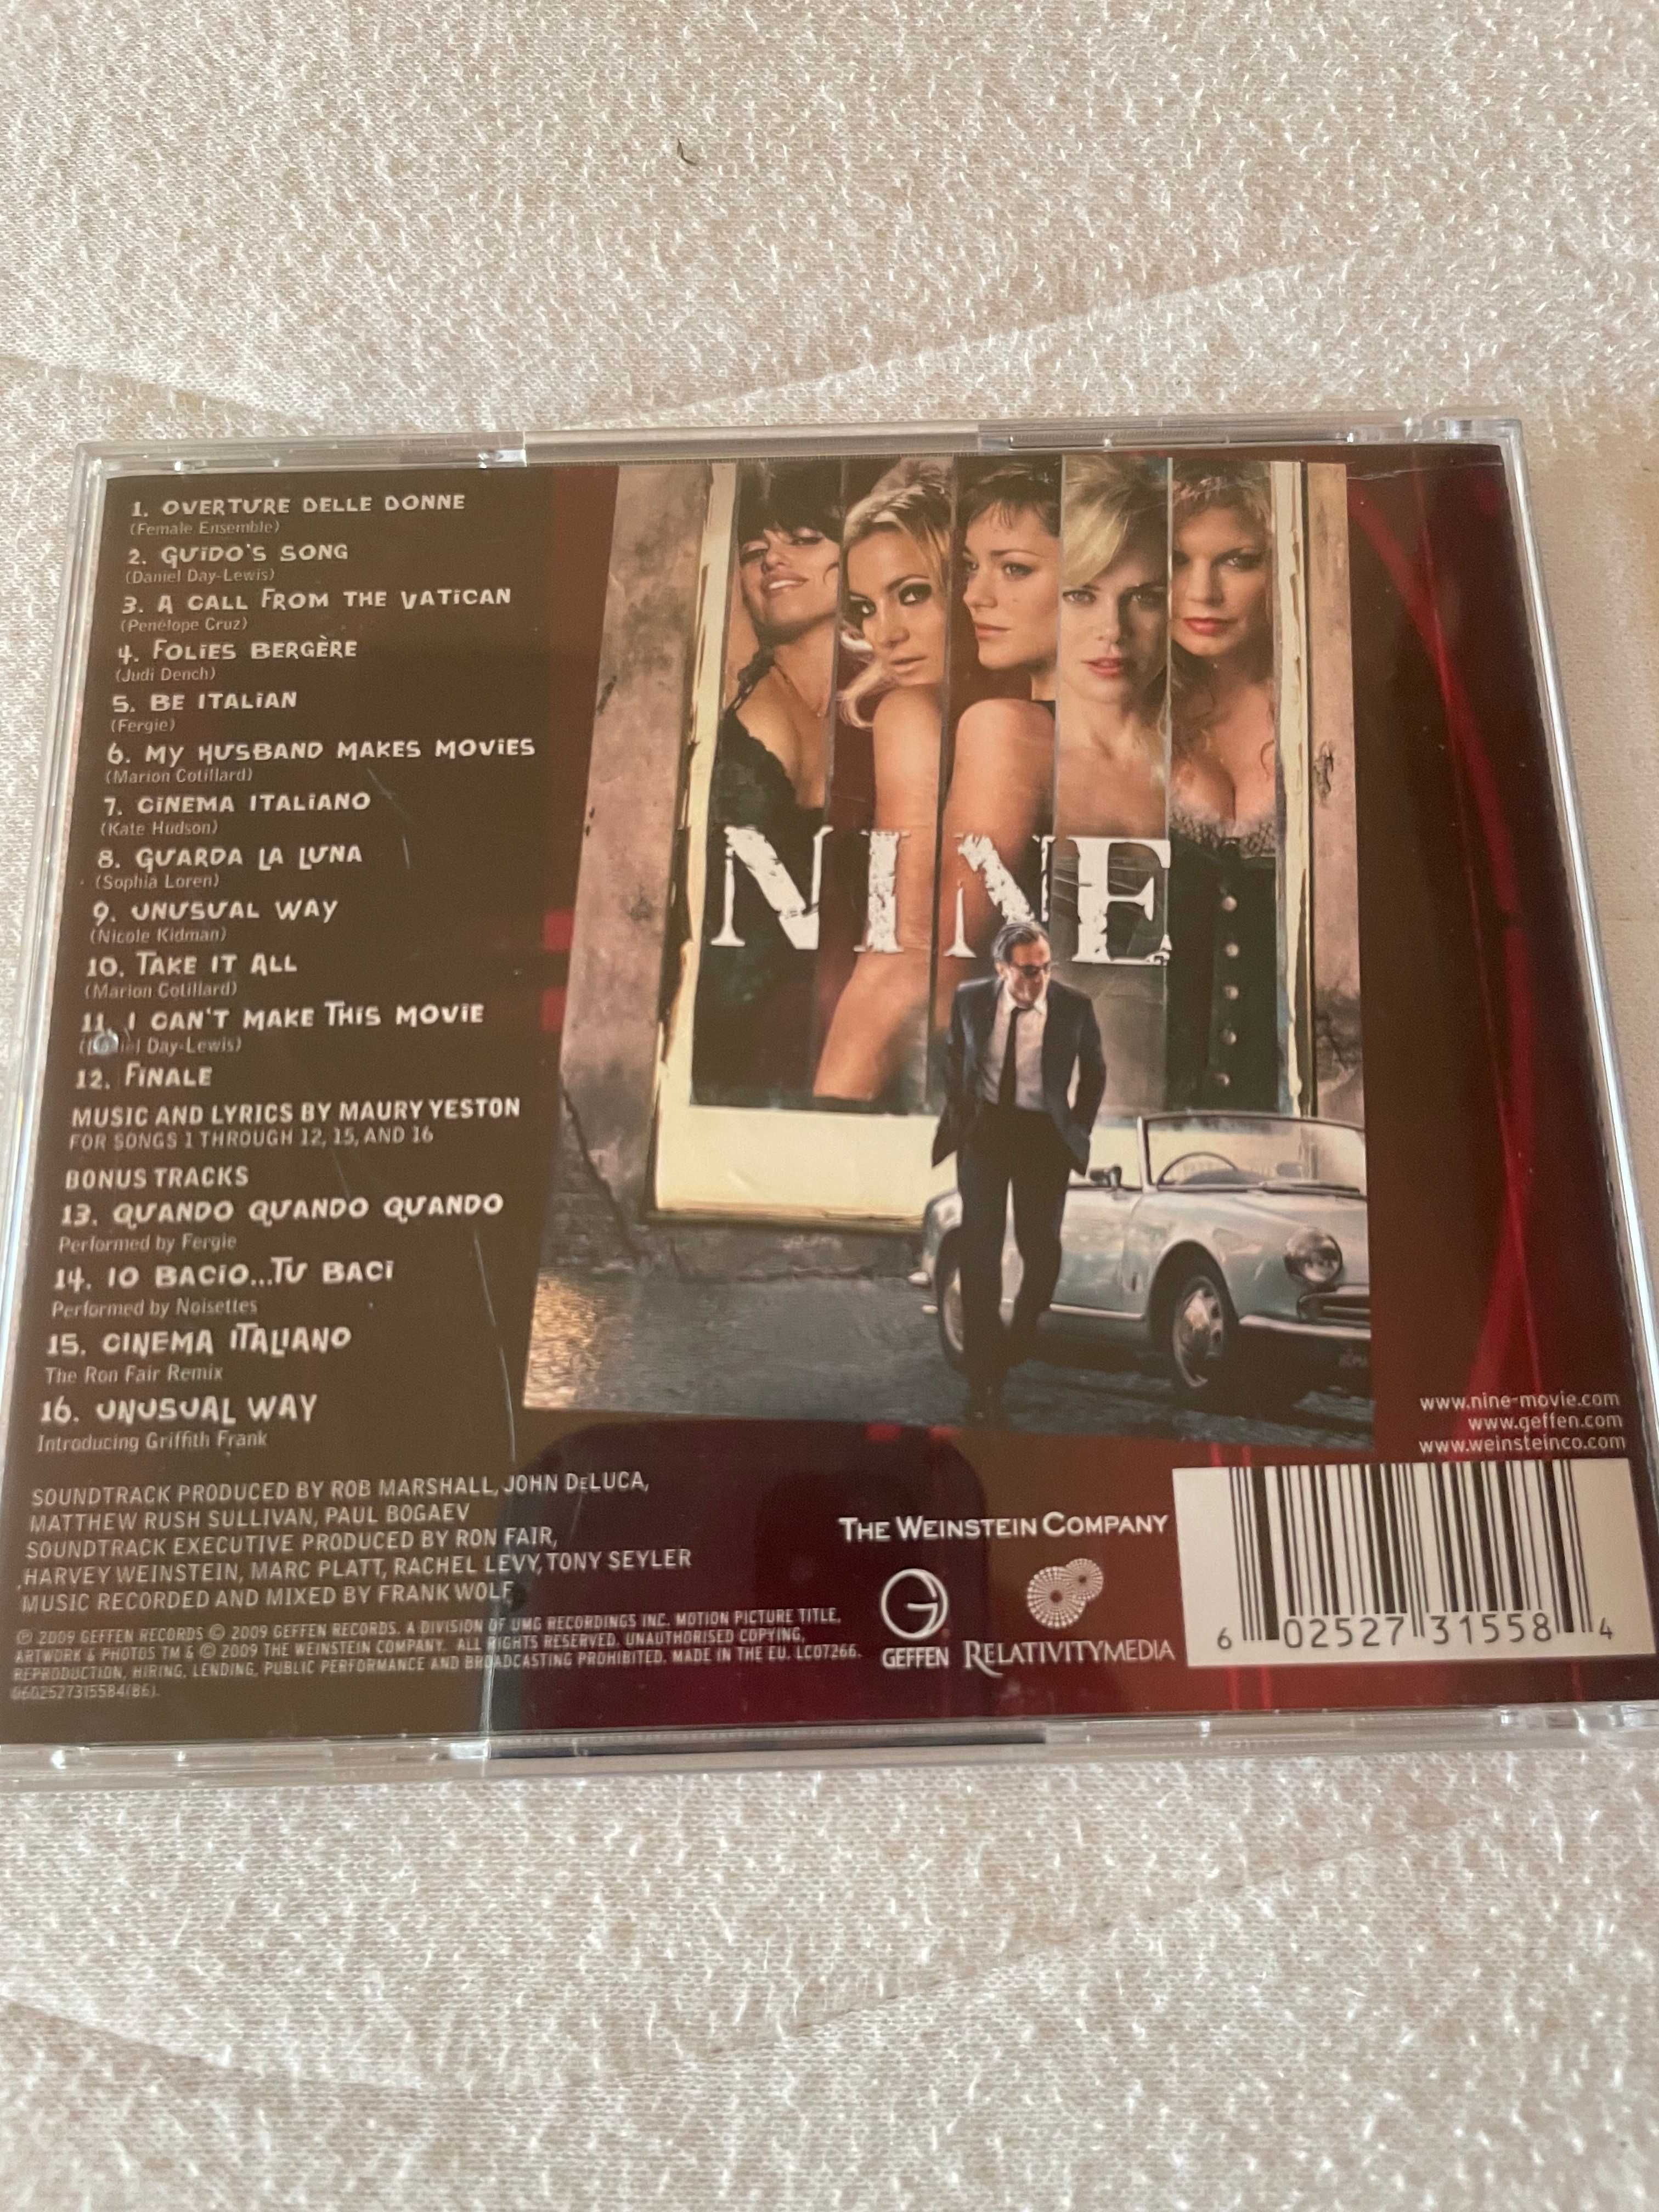 Płyta CD Soundtrack musicalu NINE OST - Olsztyn